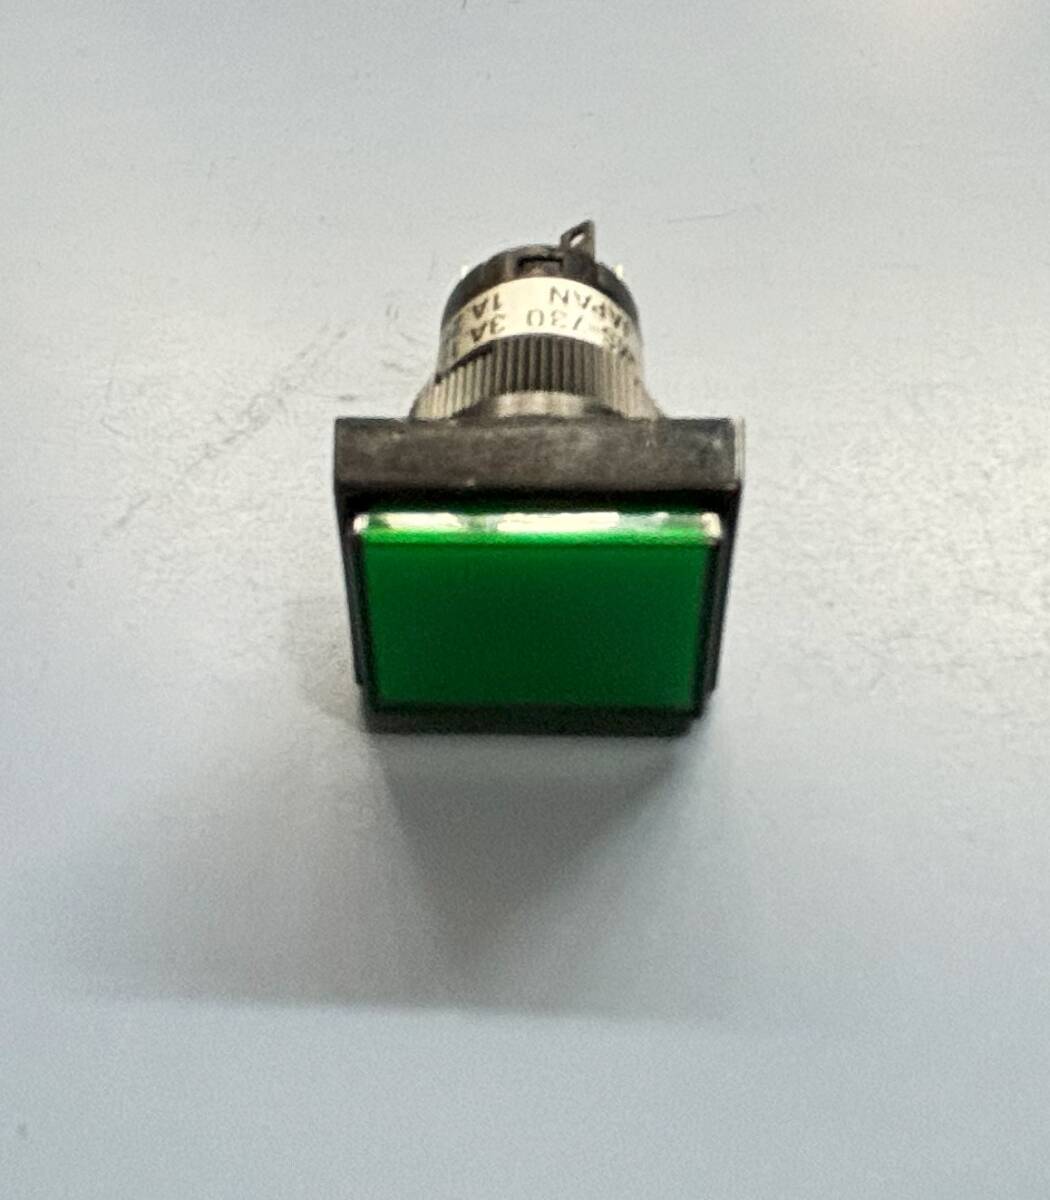  Miyama electric / illumination type pushed . button switch MS-730*-1-R-N 3 piece 